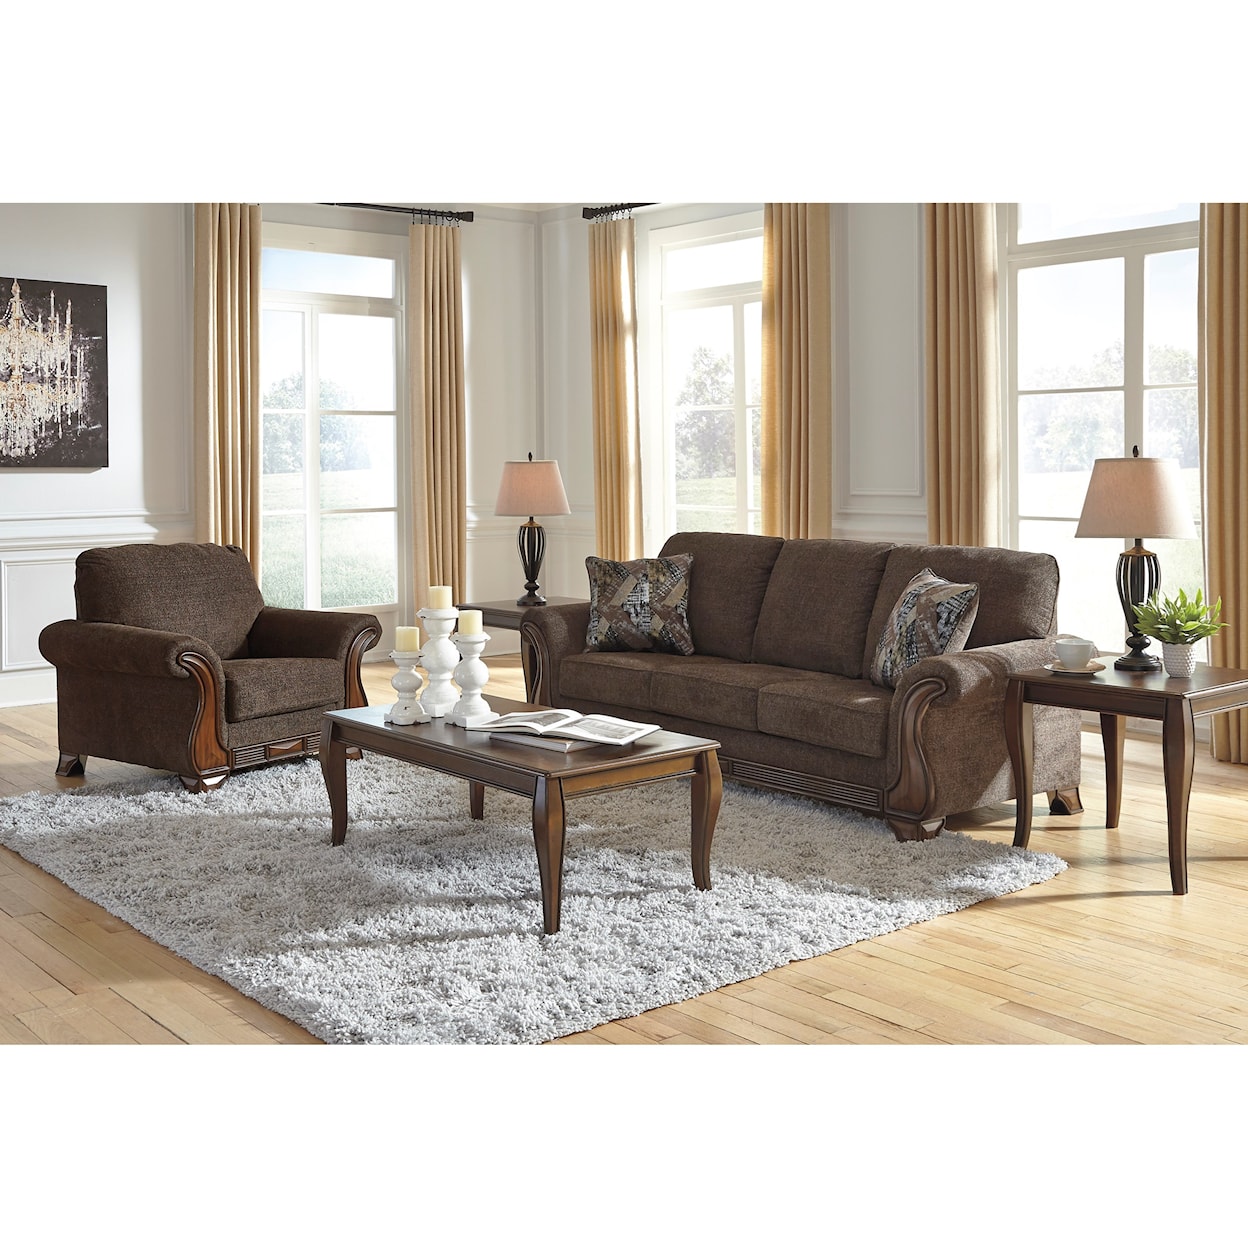 Ashley Furniture Benchcraft Miltonwood Living Room Group